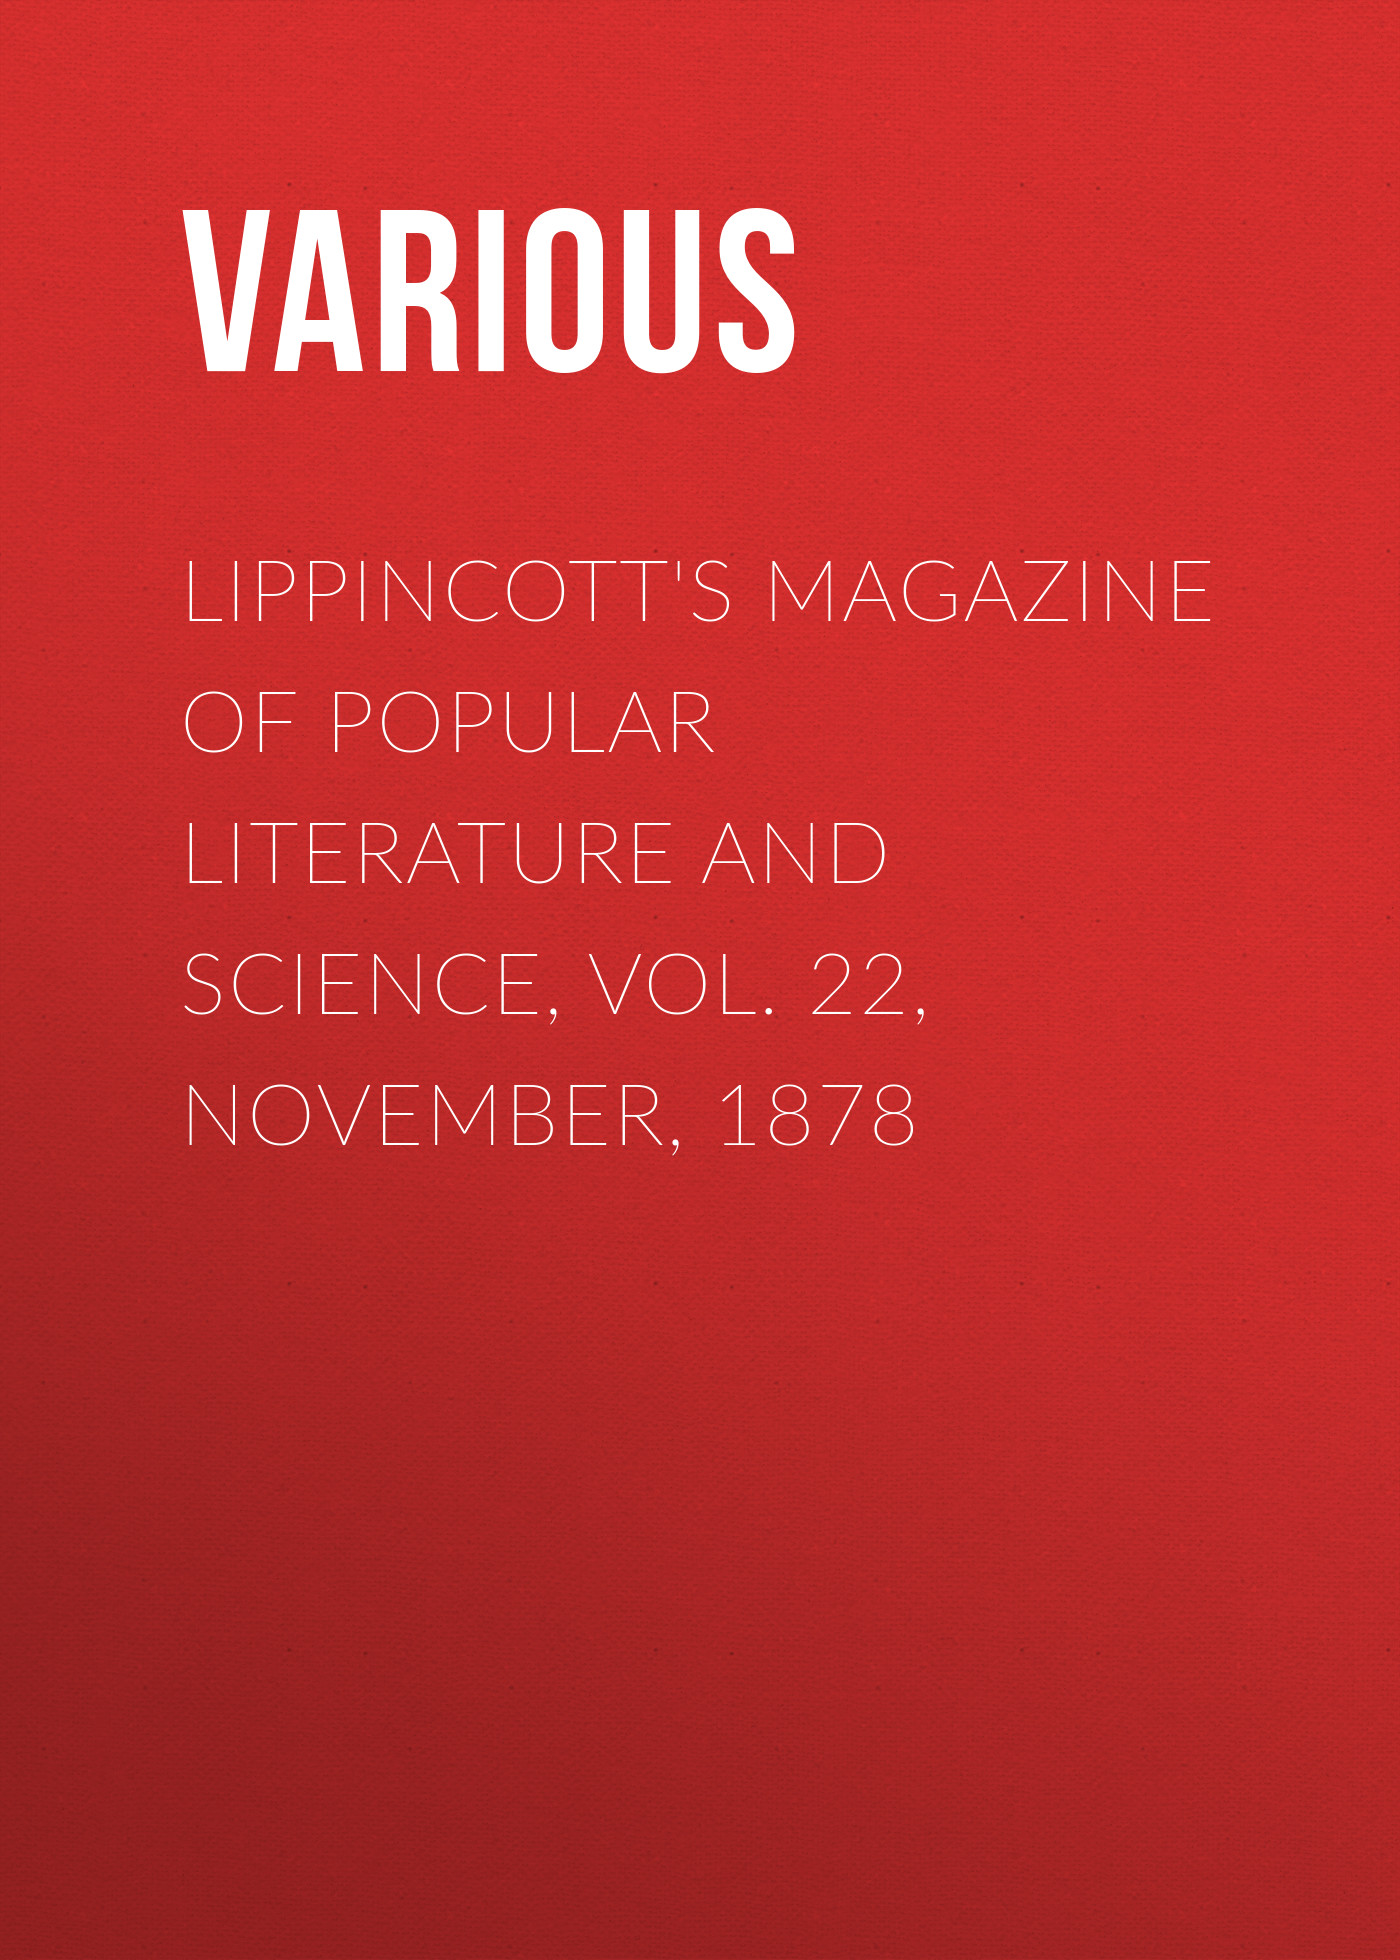 Lippincott's Magazine of Popular Literature and Science, Vol. 22, November, 1878